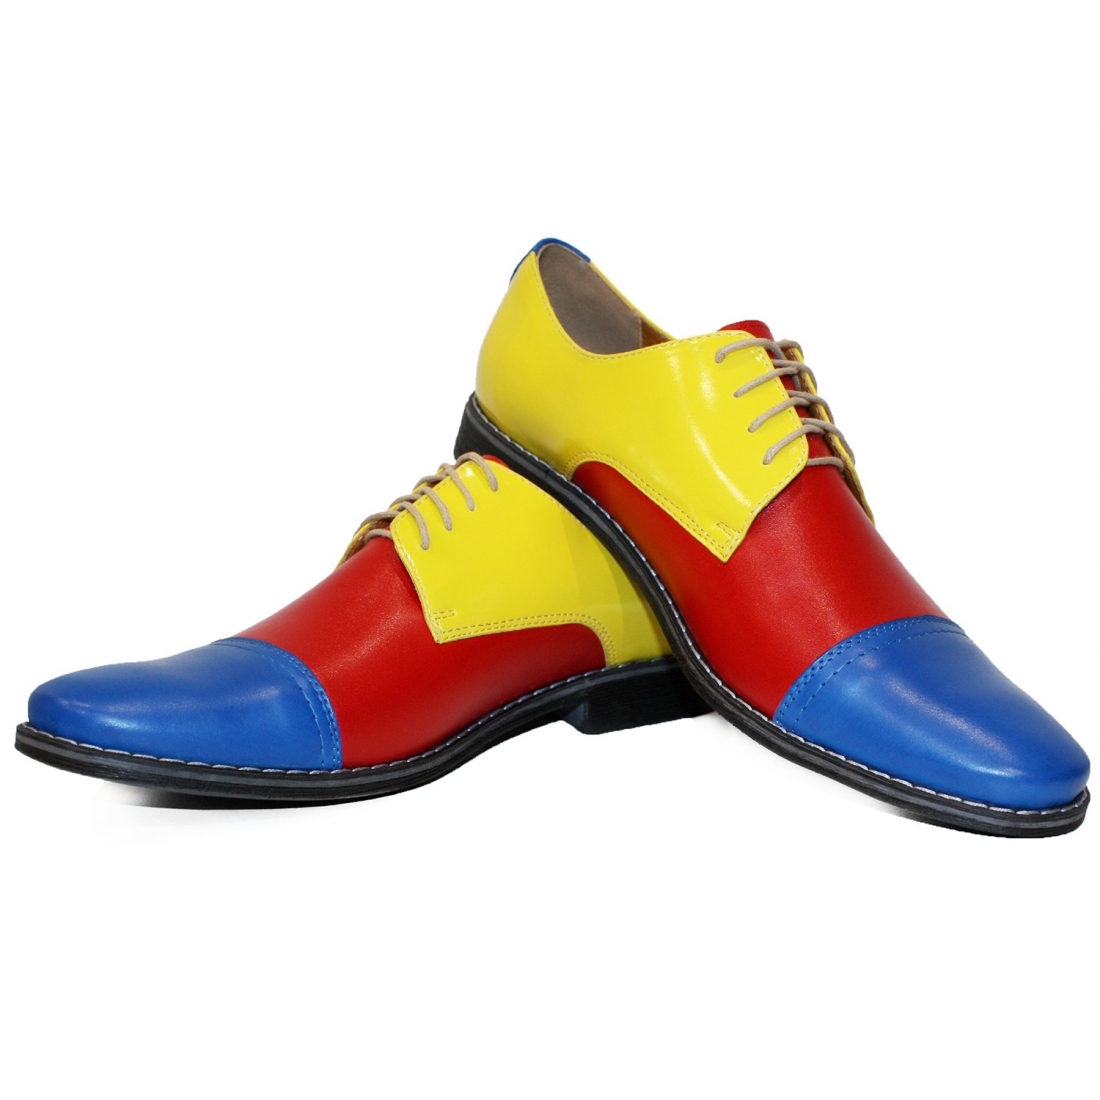 Modello Funnero - Classic Shoes - Handmade Colorful Italian Leather Shoes